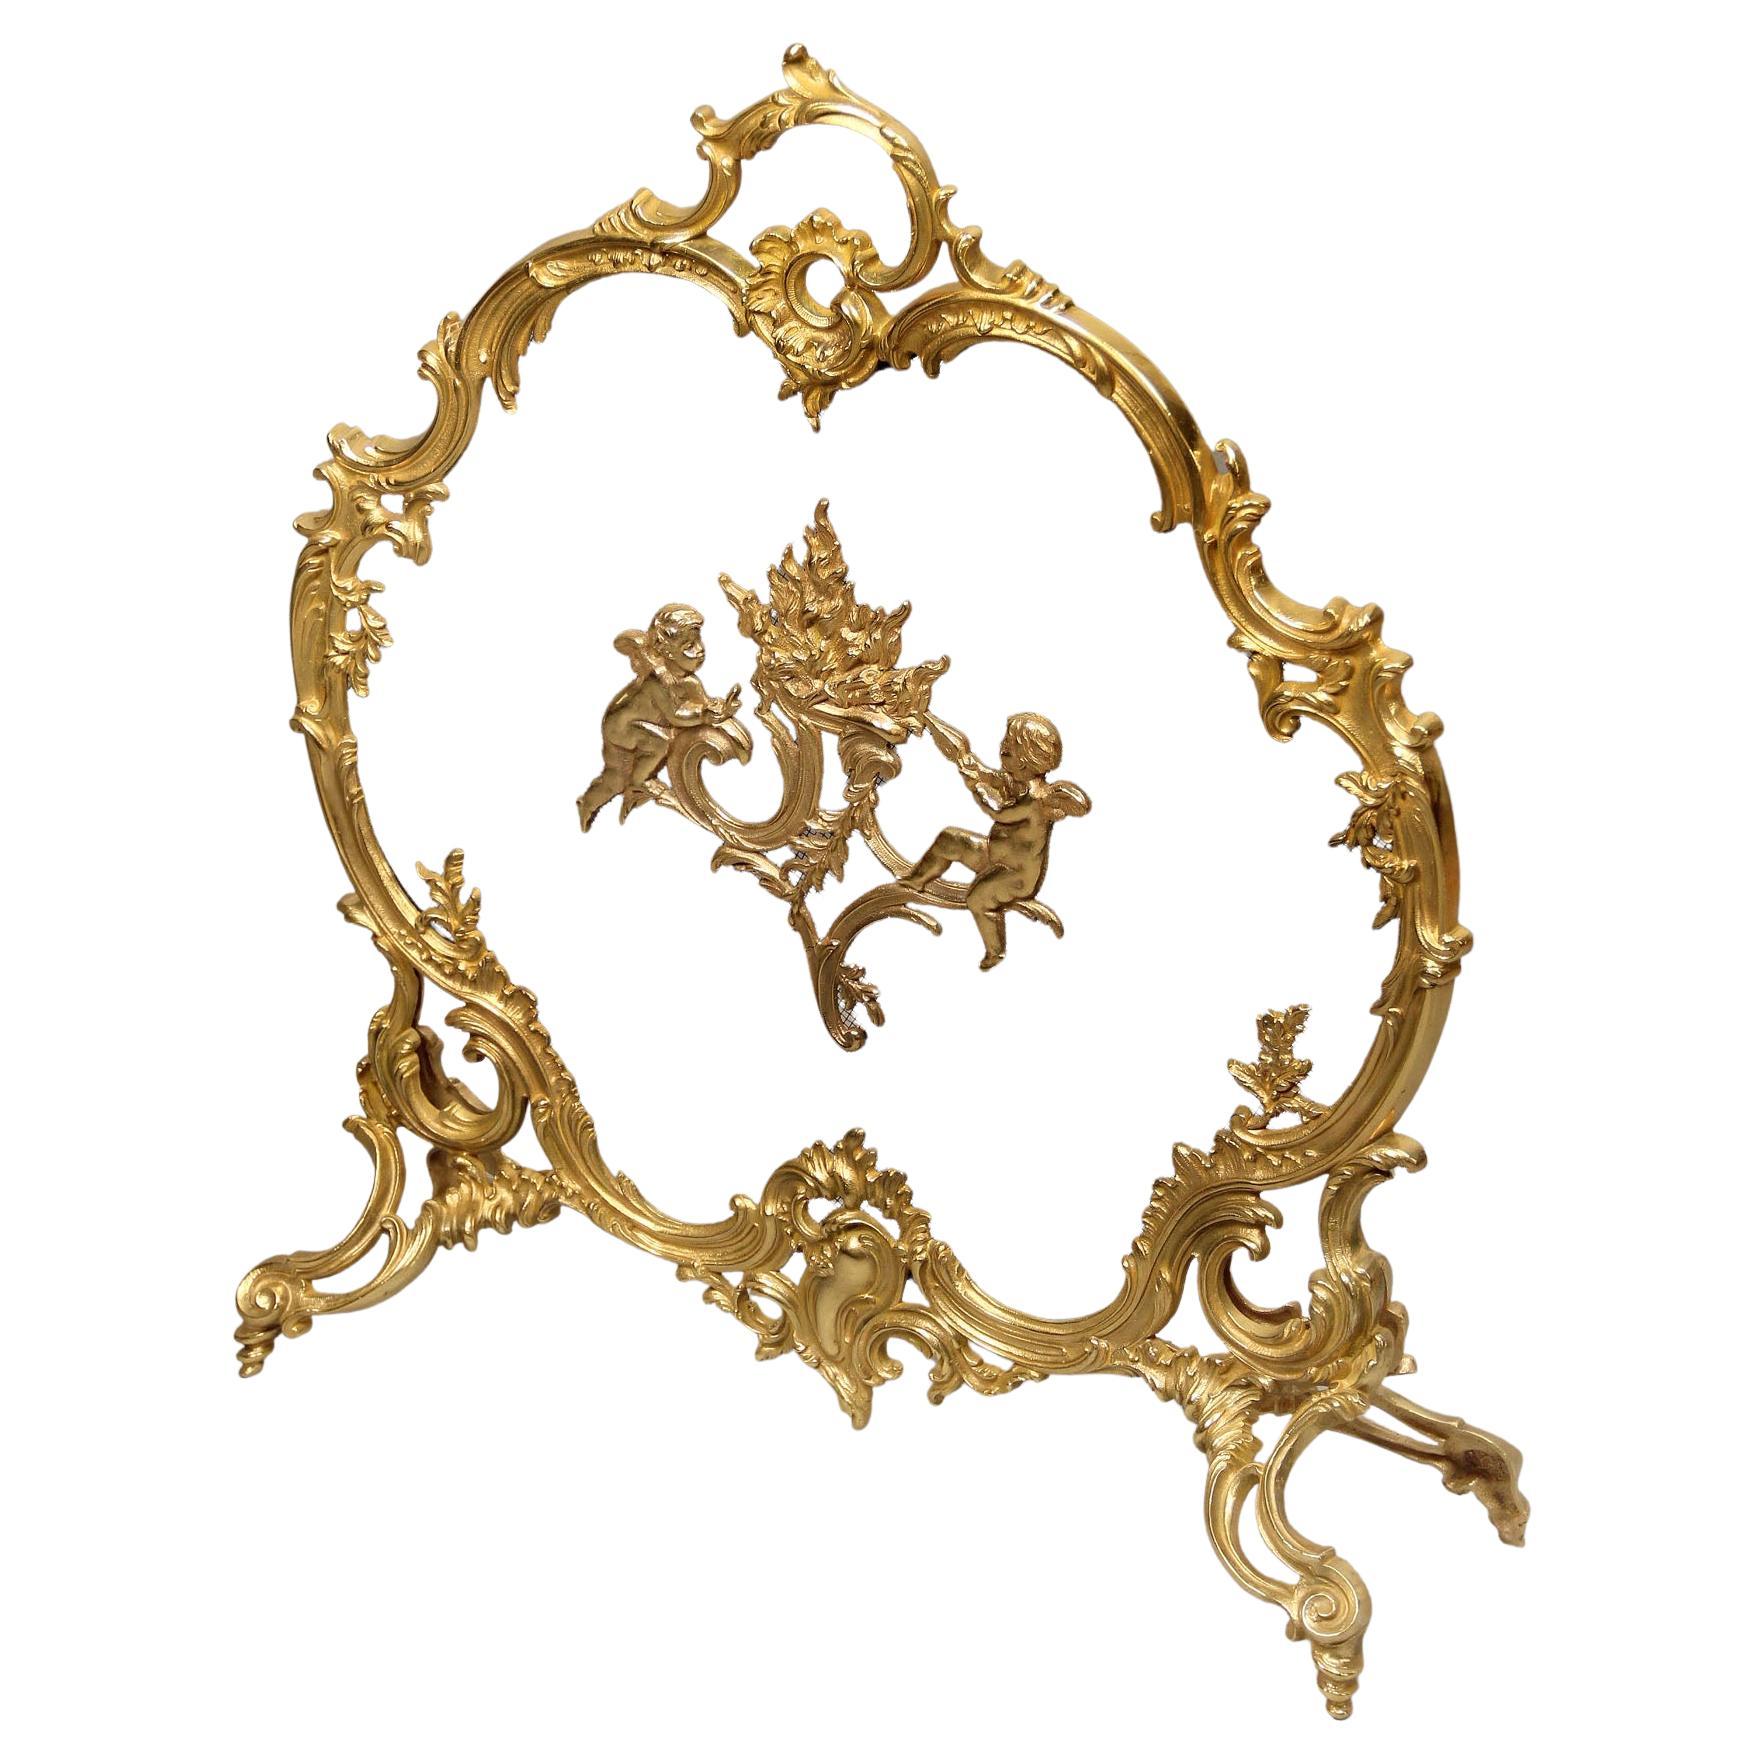 Schöner vergoldeter Bronze-Kaminschirm aus dem späten 19.